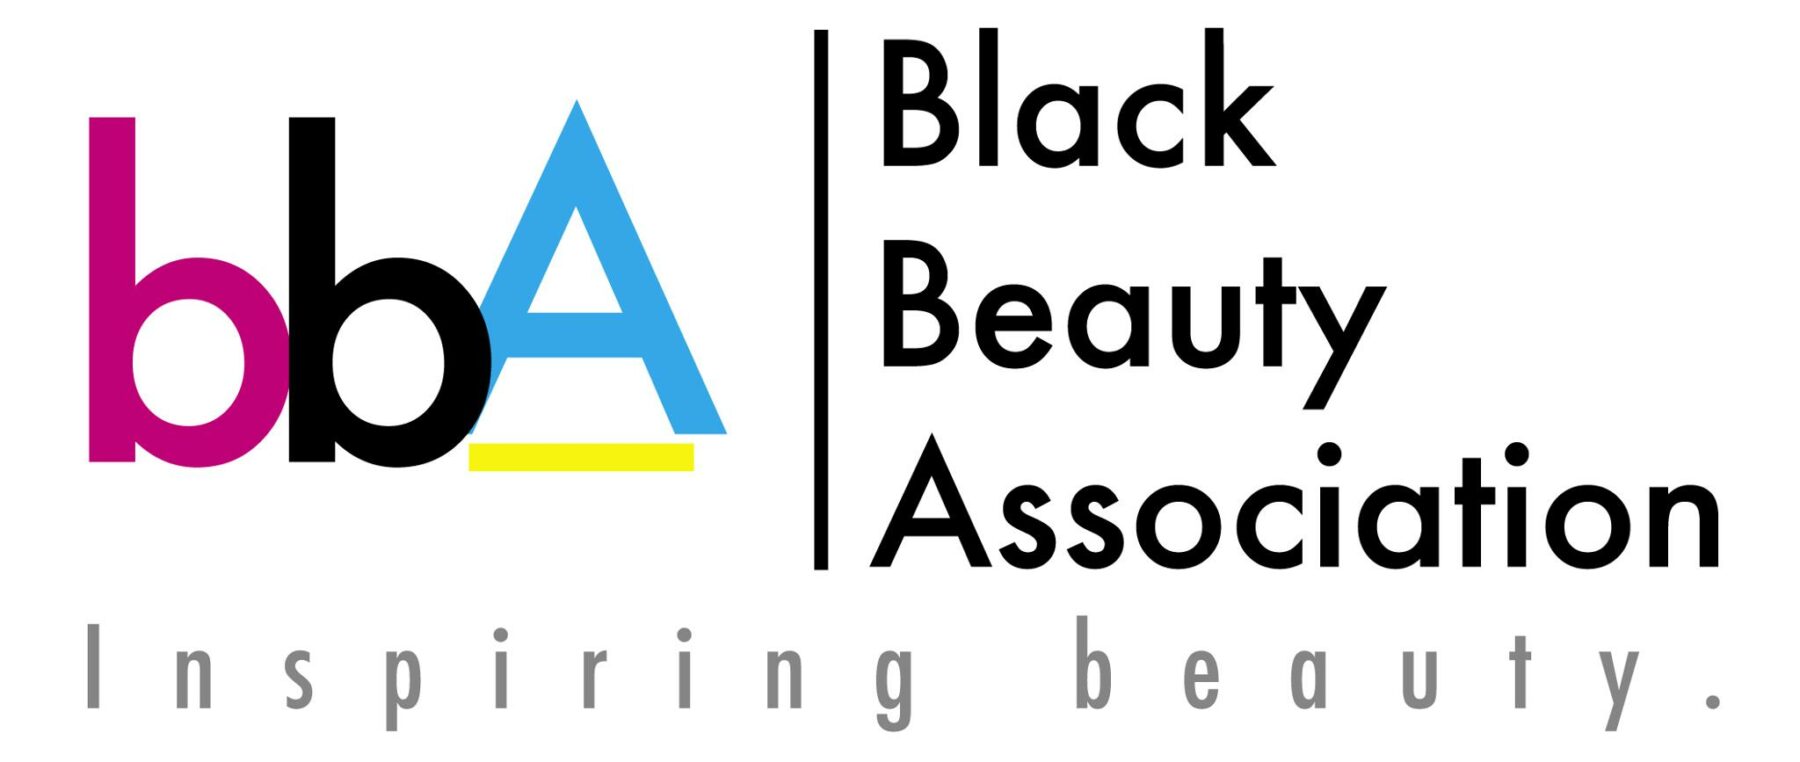 Black Beauty Association - Professional Associations - JobStars USA